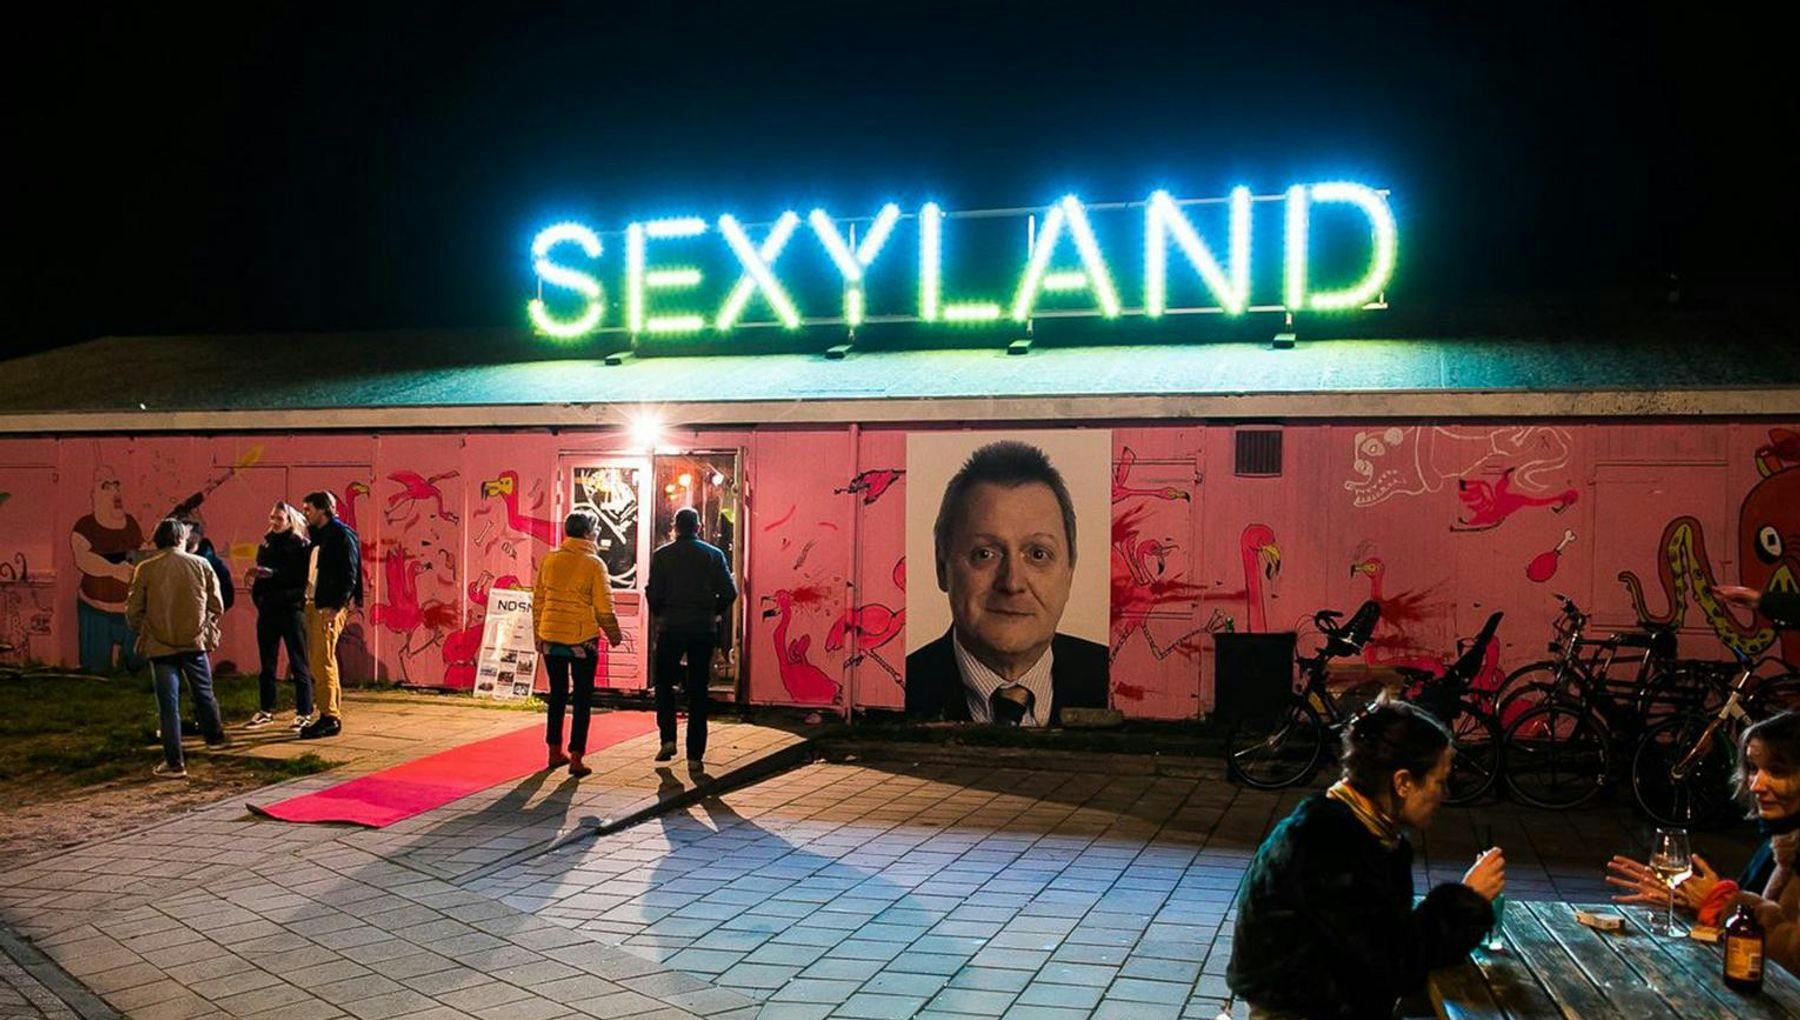 Sexyland exteriors at night